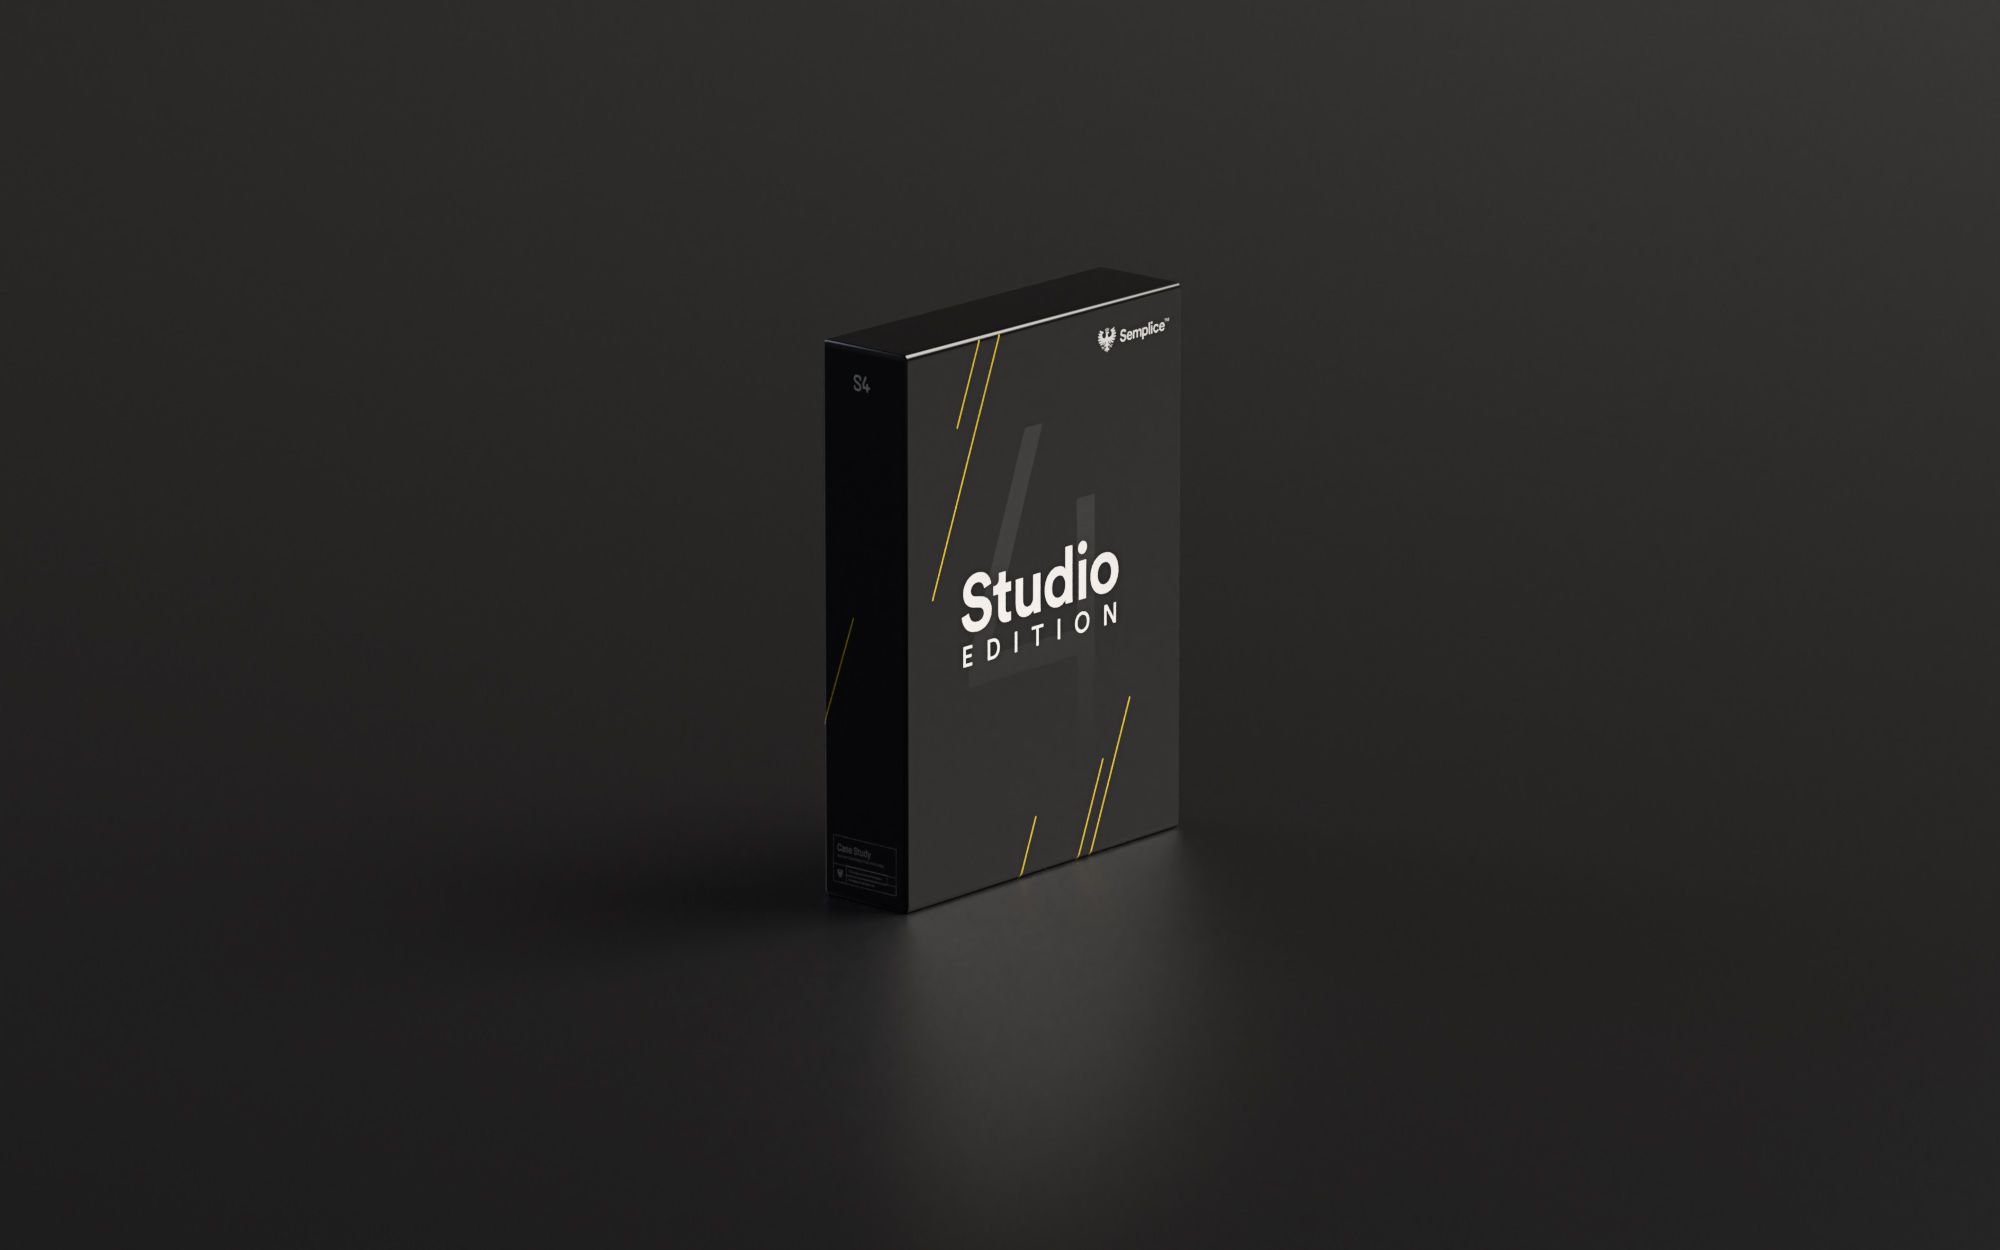 Rendered image of Semplice Studio box art using Adobe Dimension